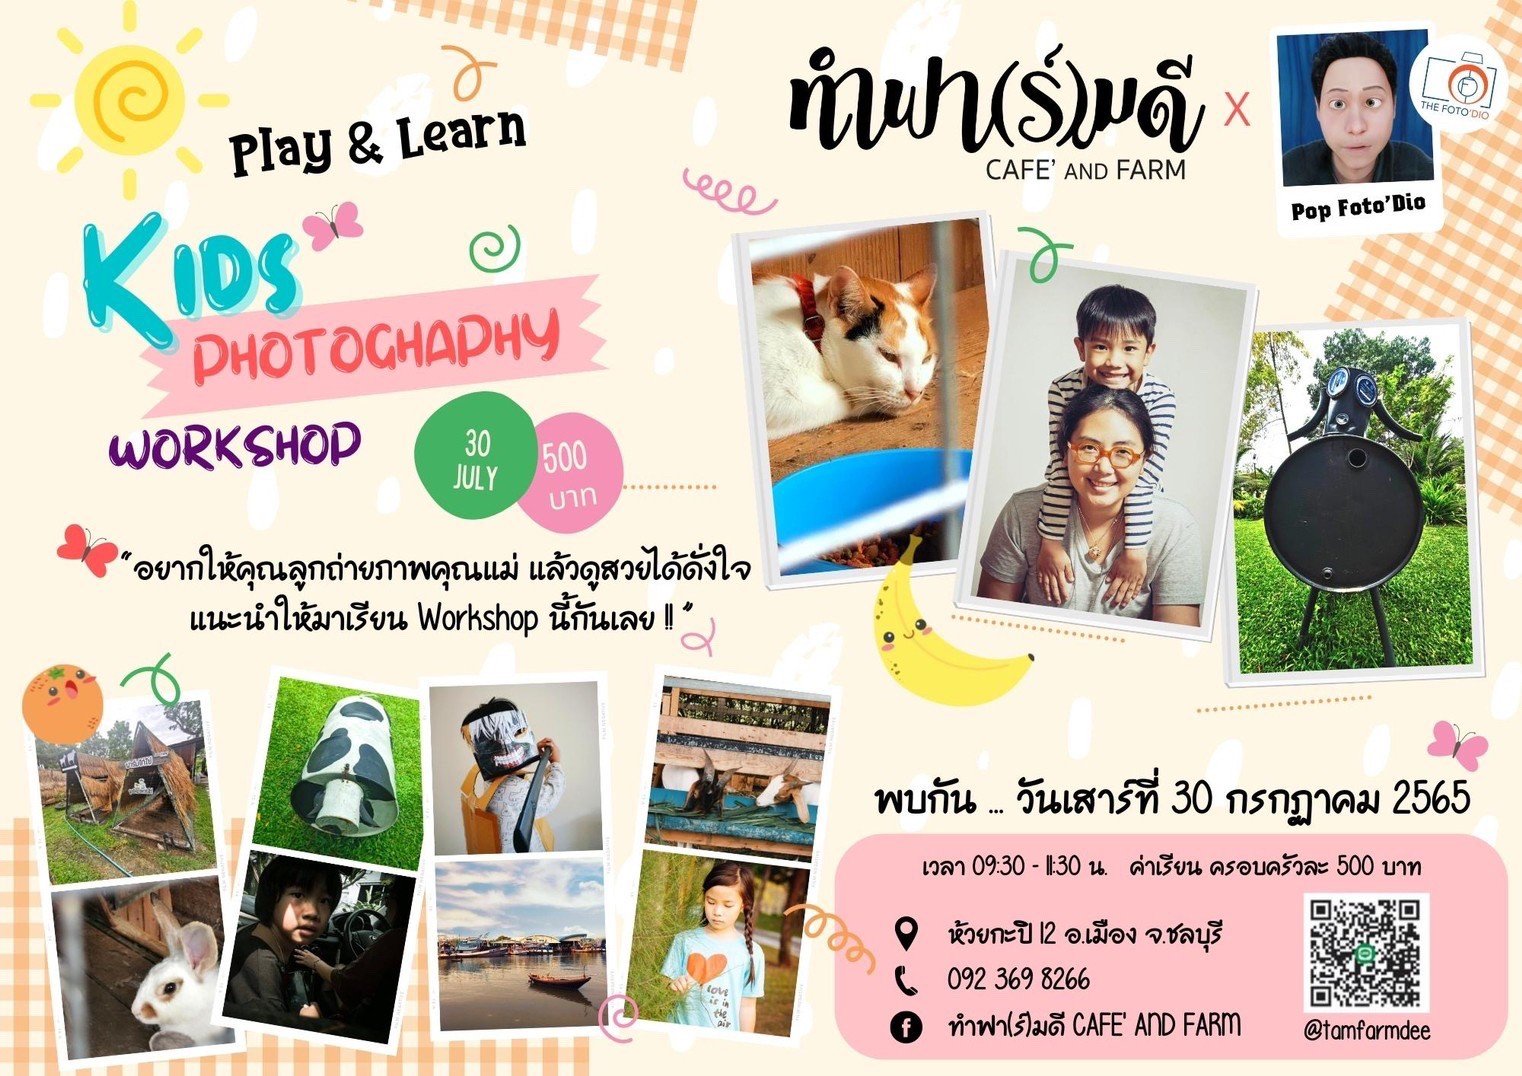 Learn & Play ภาพถ่ายเล่าเรื่อง Kid Photography Workshop by Pop Foto'Dio